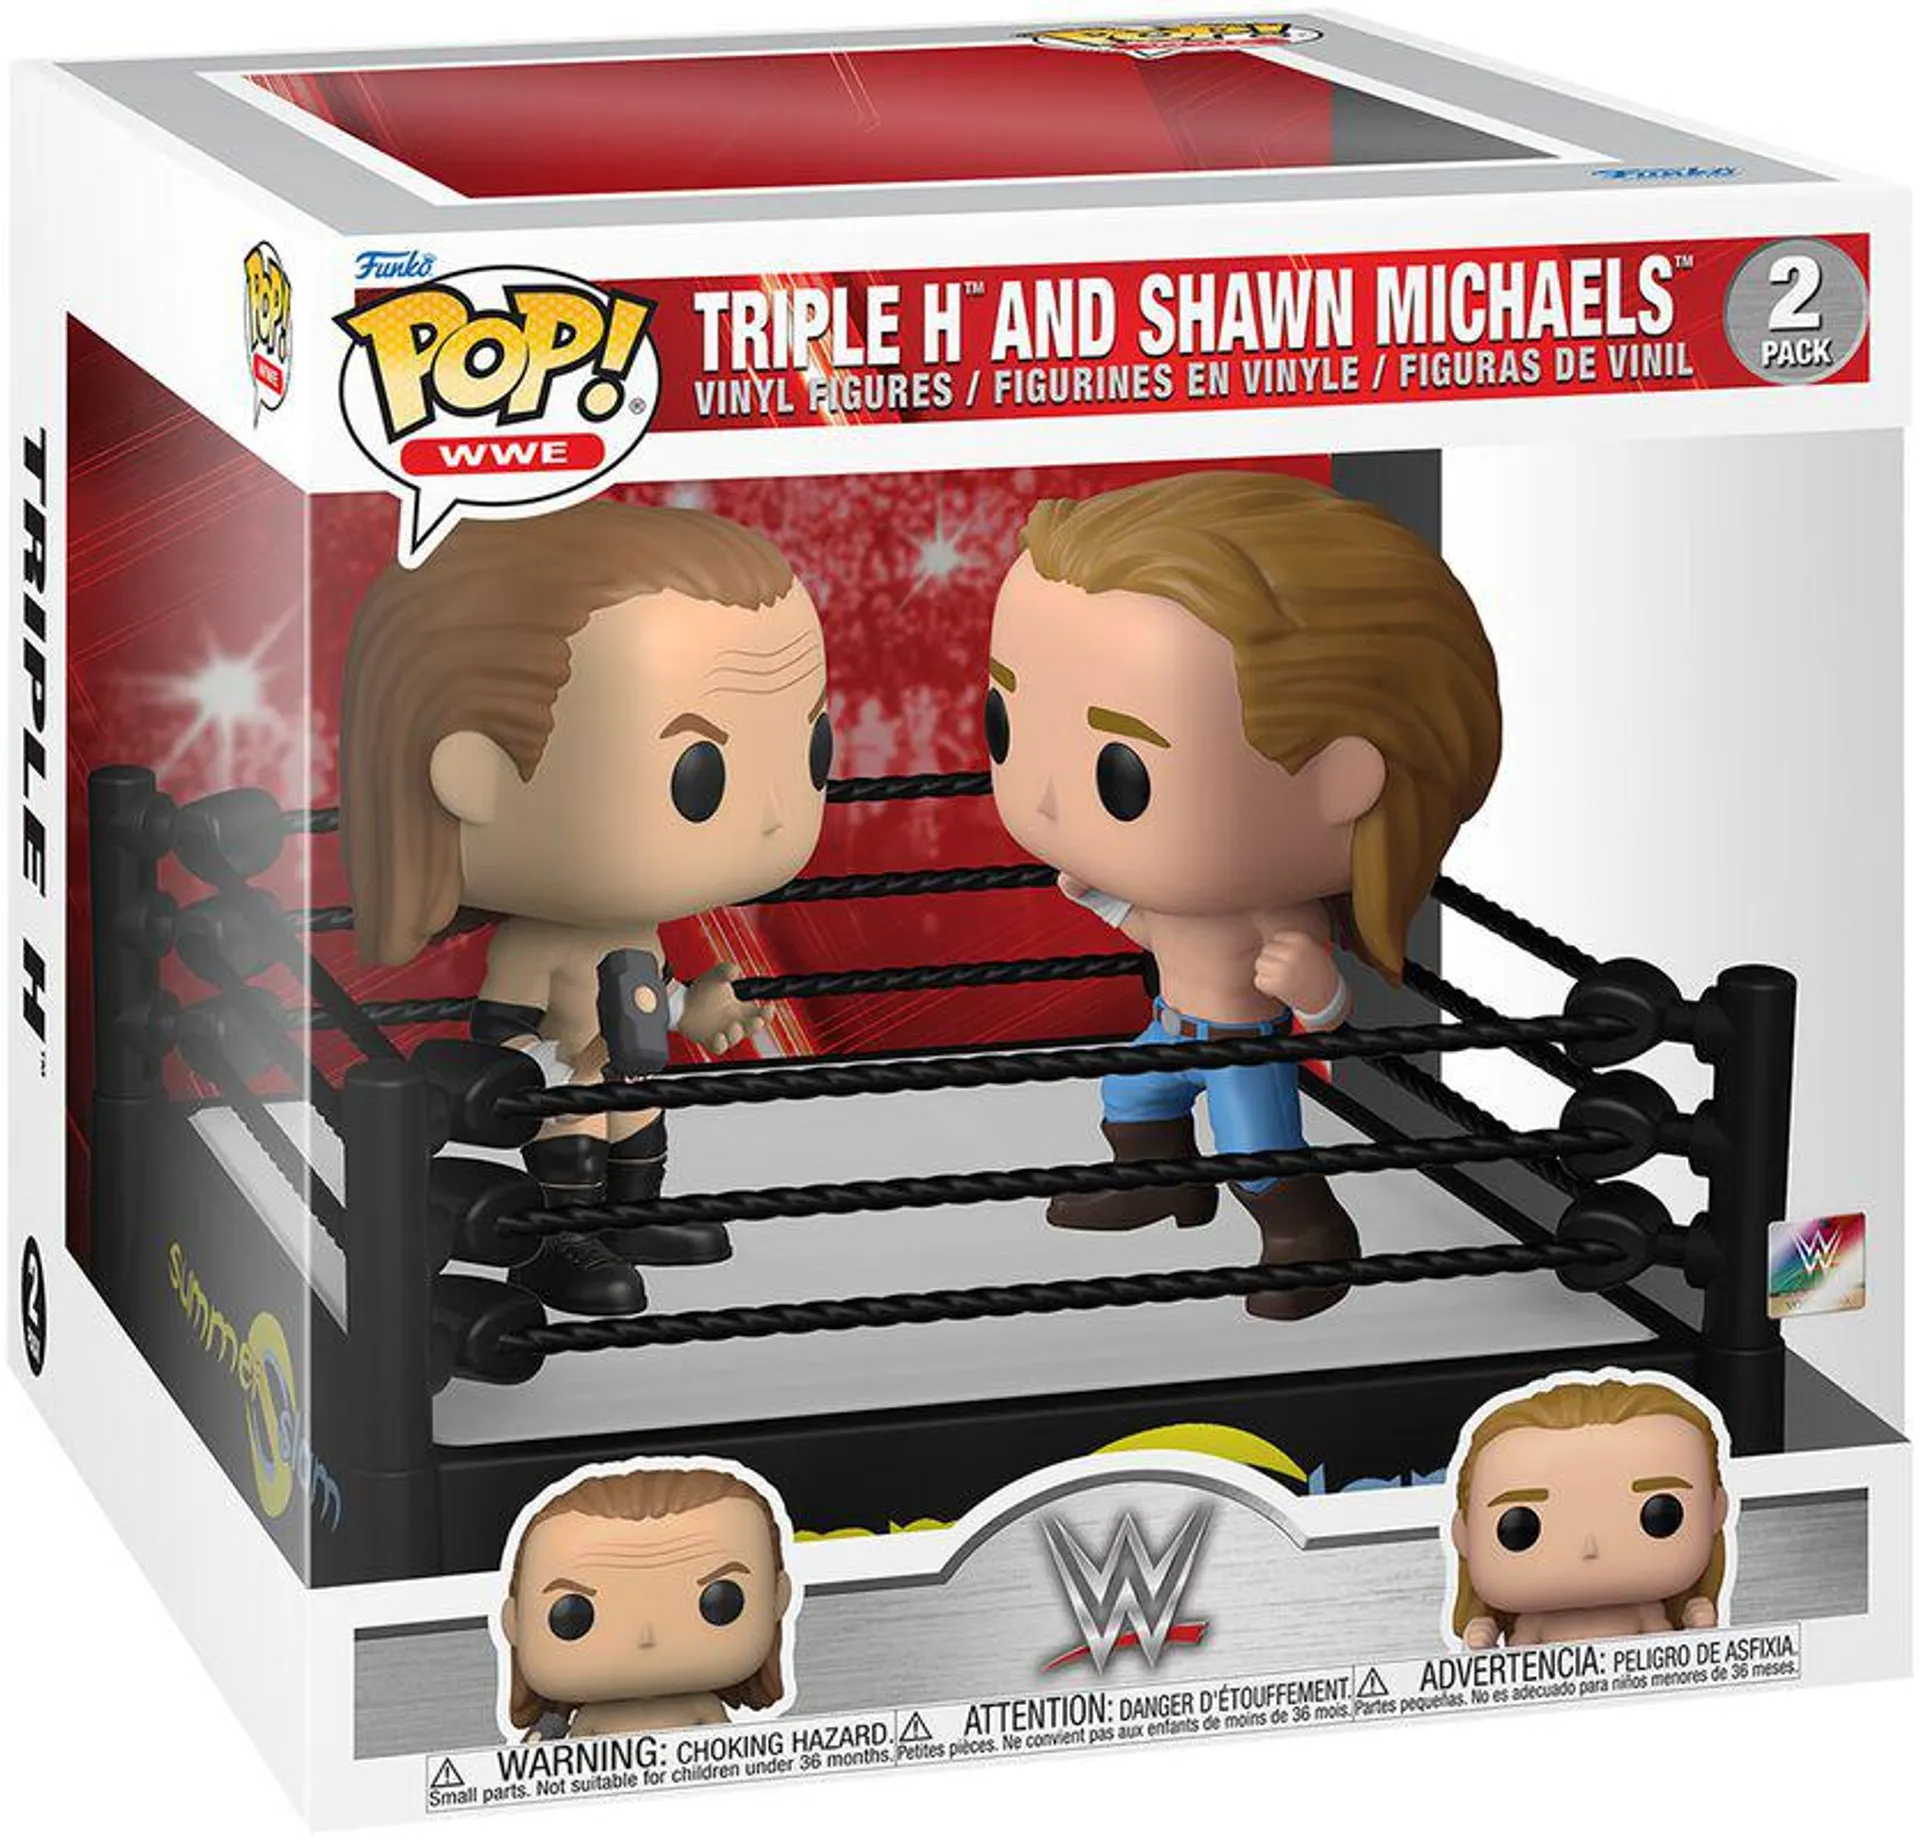 "Figura vinilo Triple H and Shawn Michaels (Pop! Moment)" ¡Funko Pop! de WWE